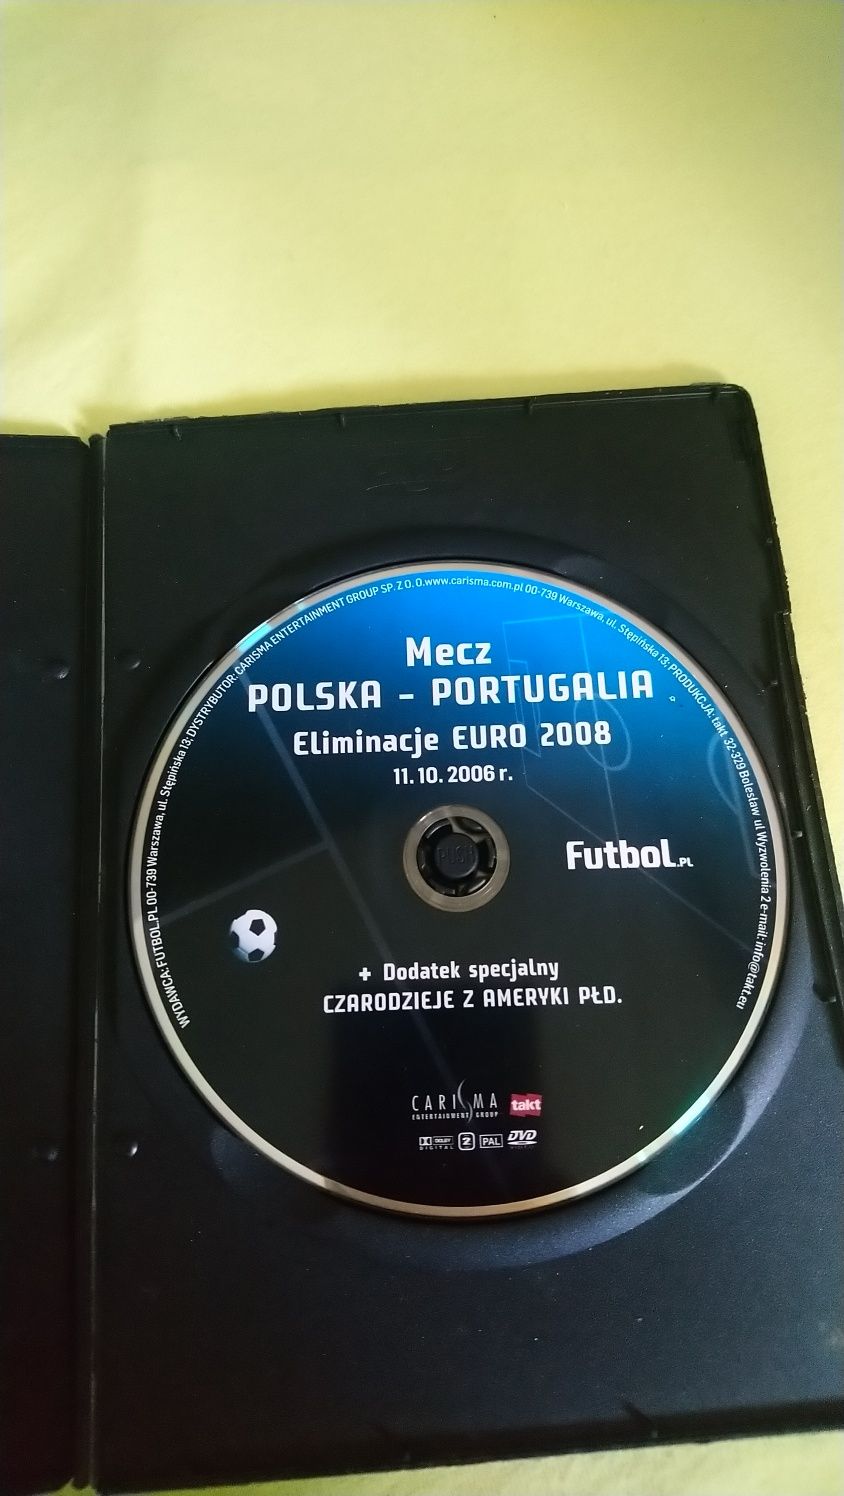 Plyta dvd mecz polska-portugalia kolekcja futbol